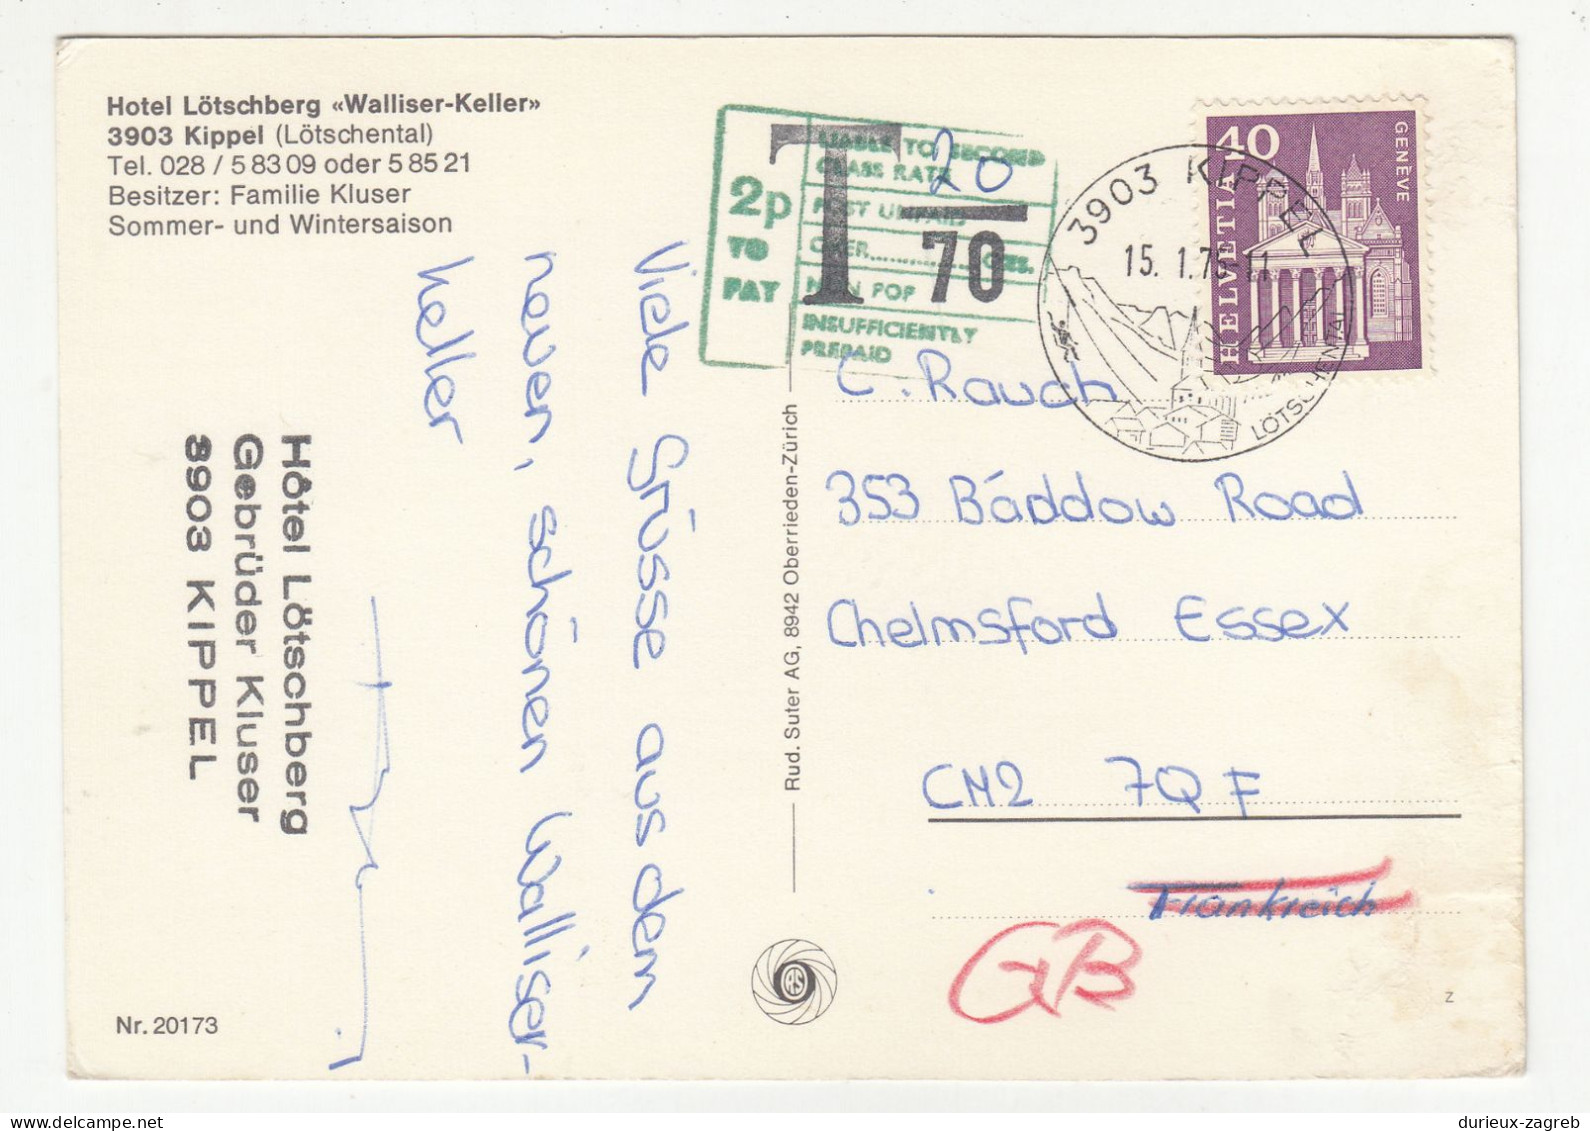 Switzerland Hotel Lötschberg "Walliser-Keller" Postcard Posted 1975 - Taxed Postage Due B240510 - Tasse